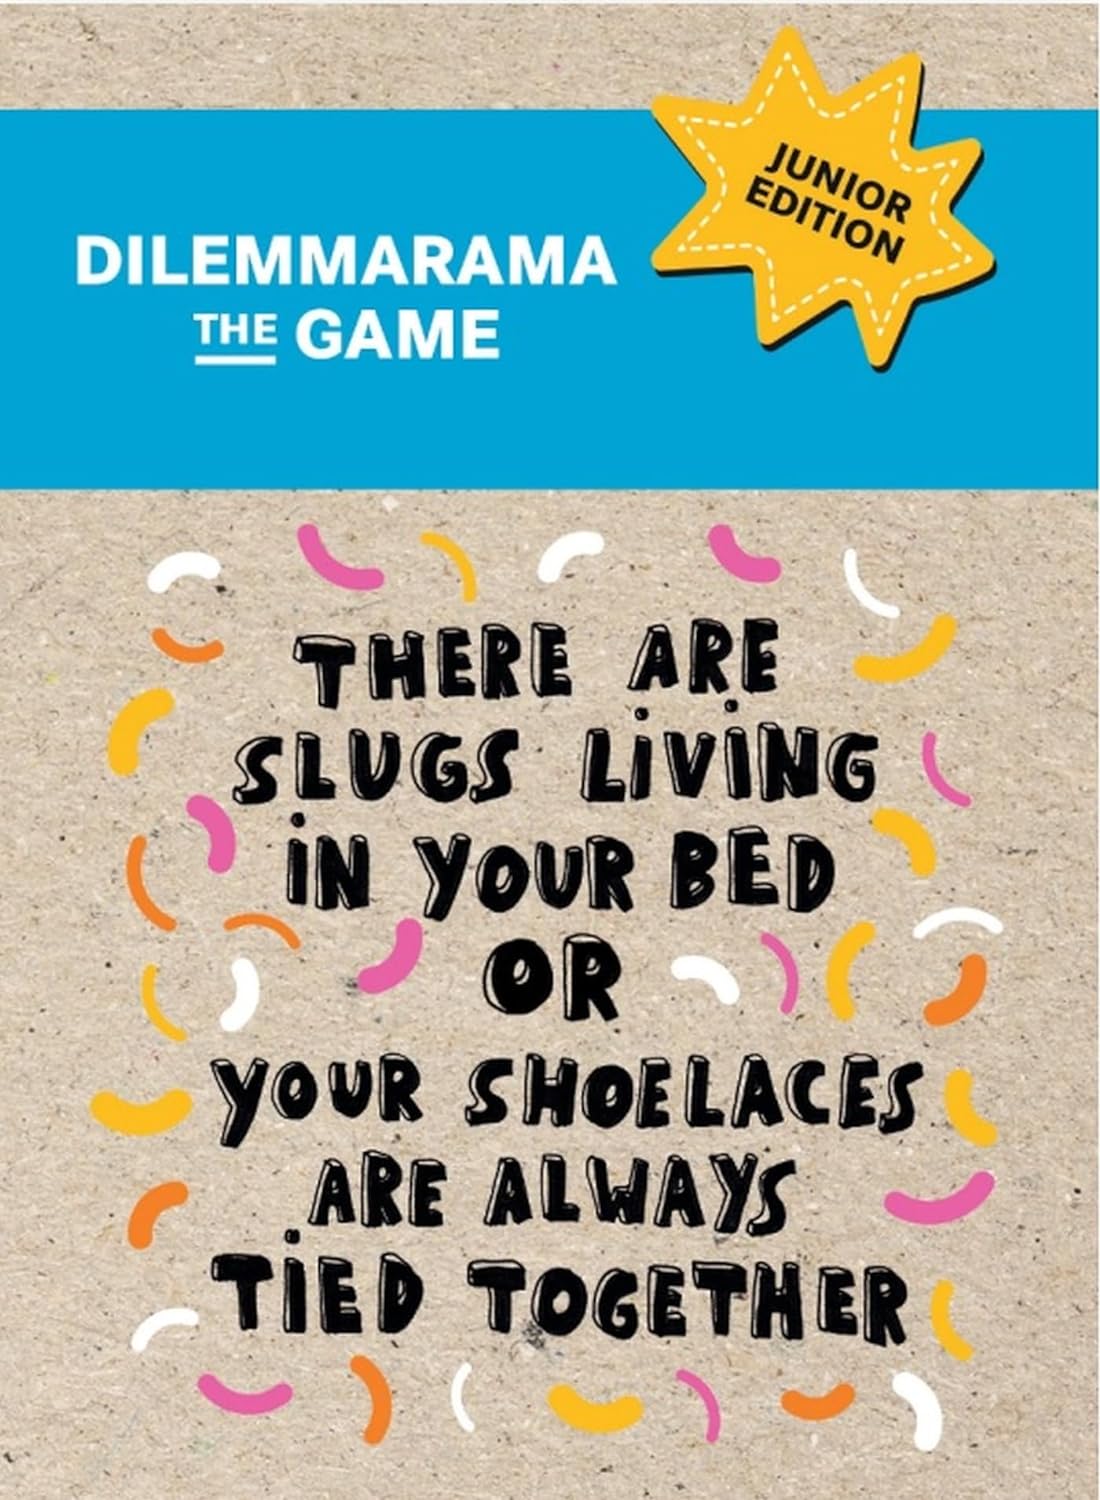 Dilemmarama the Game: Junior edition